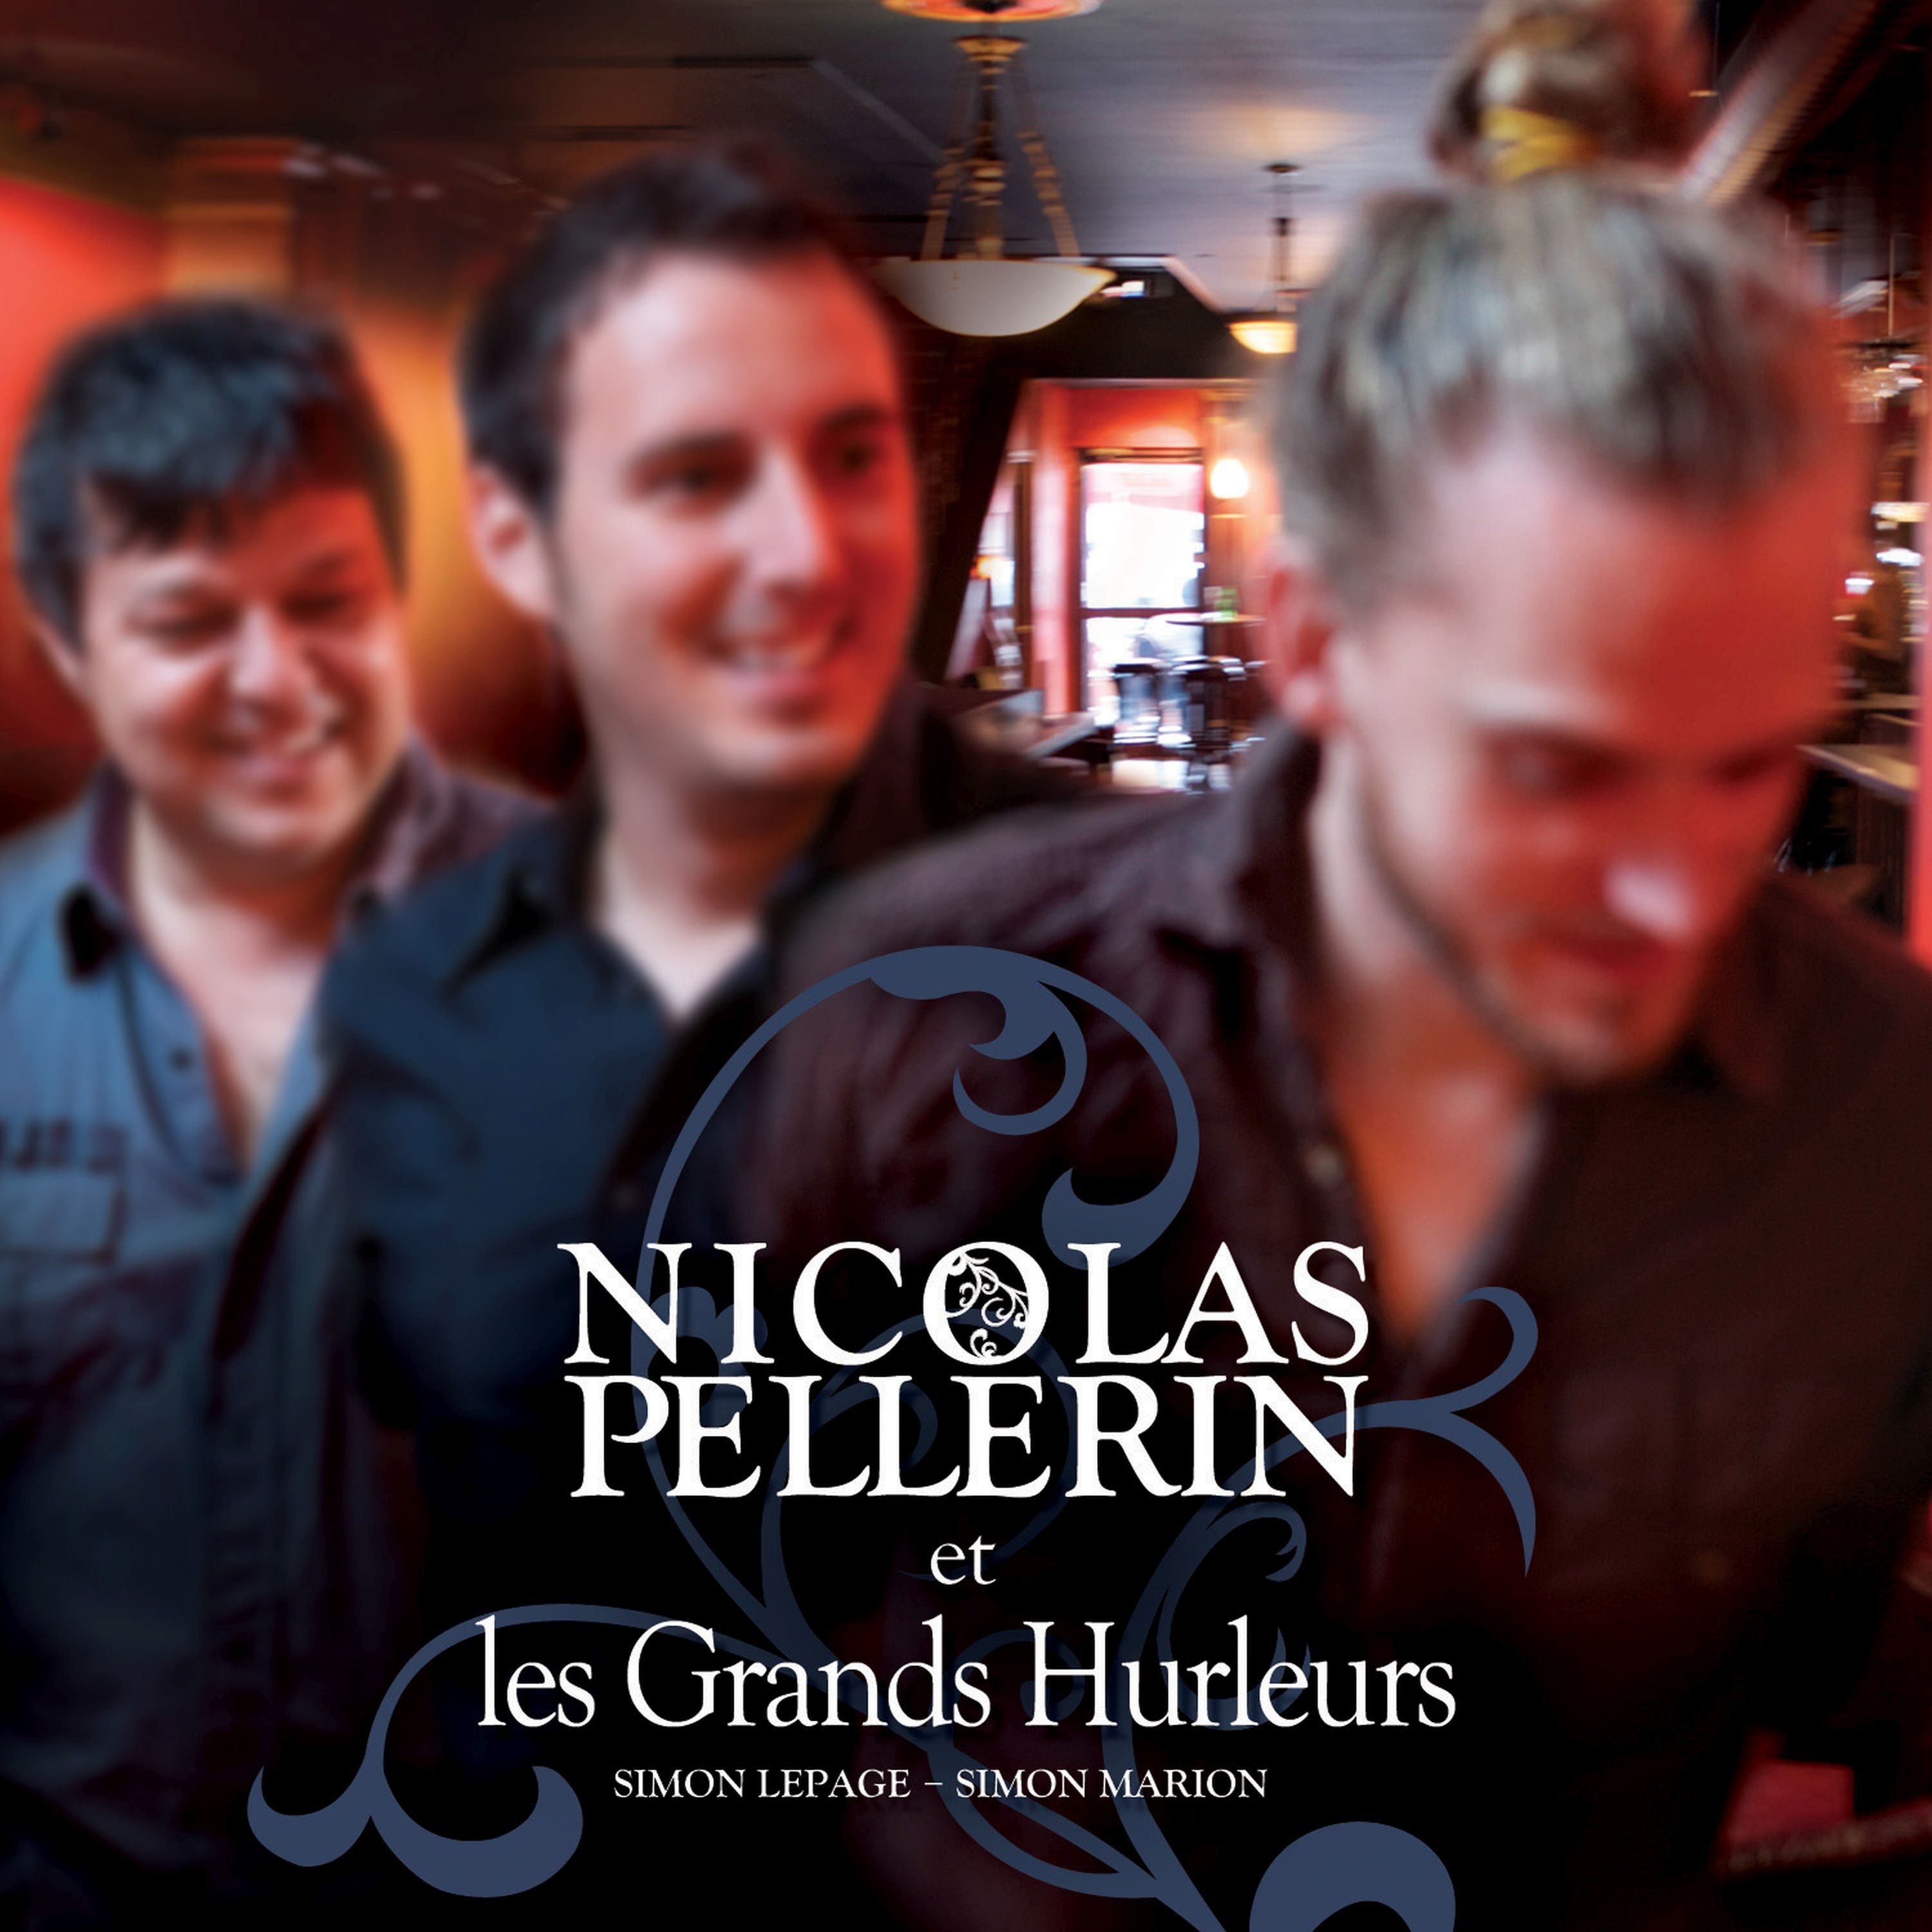 Nicolas Pellerin et les Grands Hurleurs